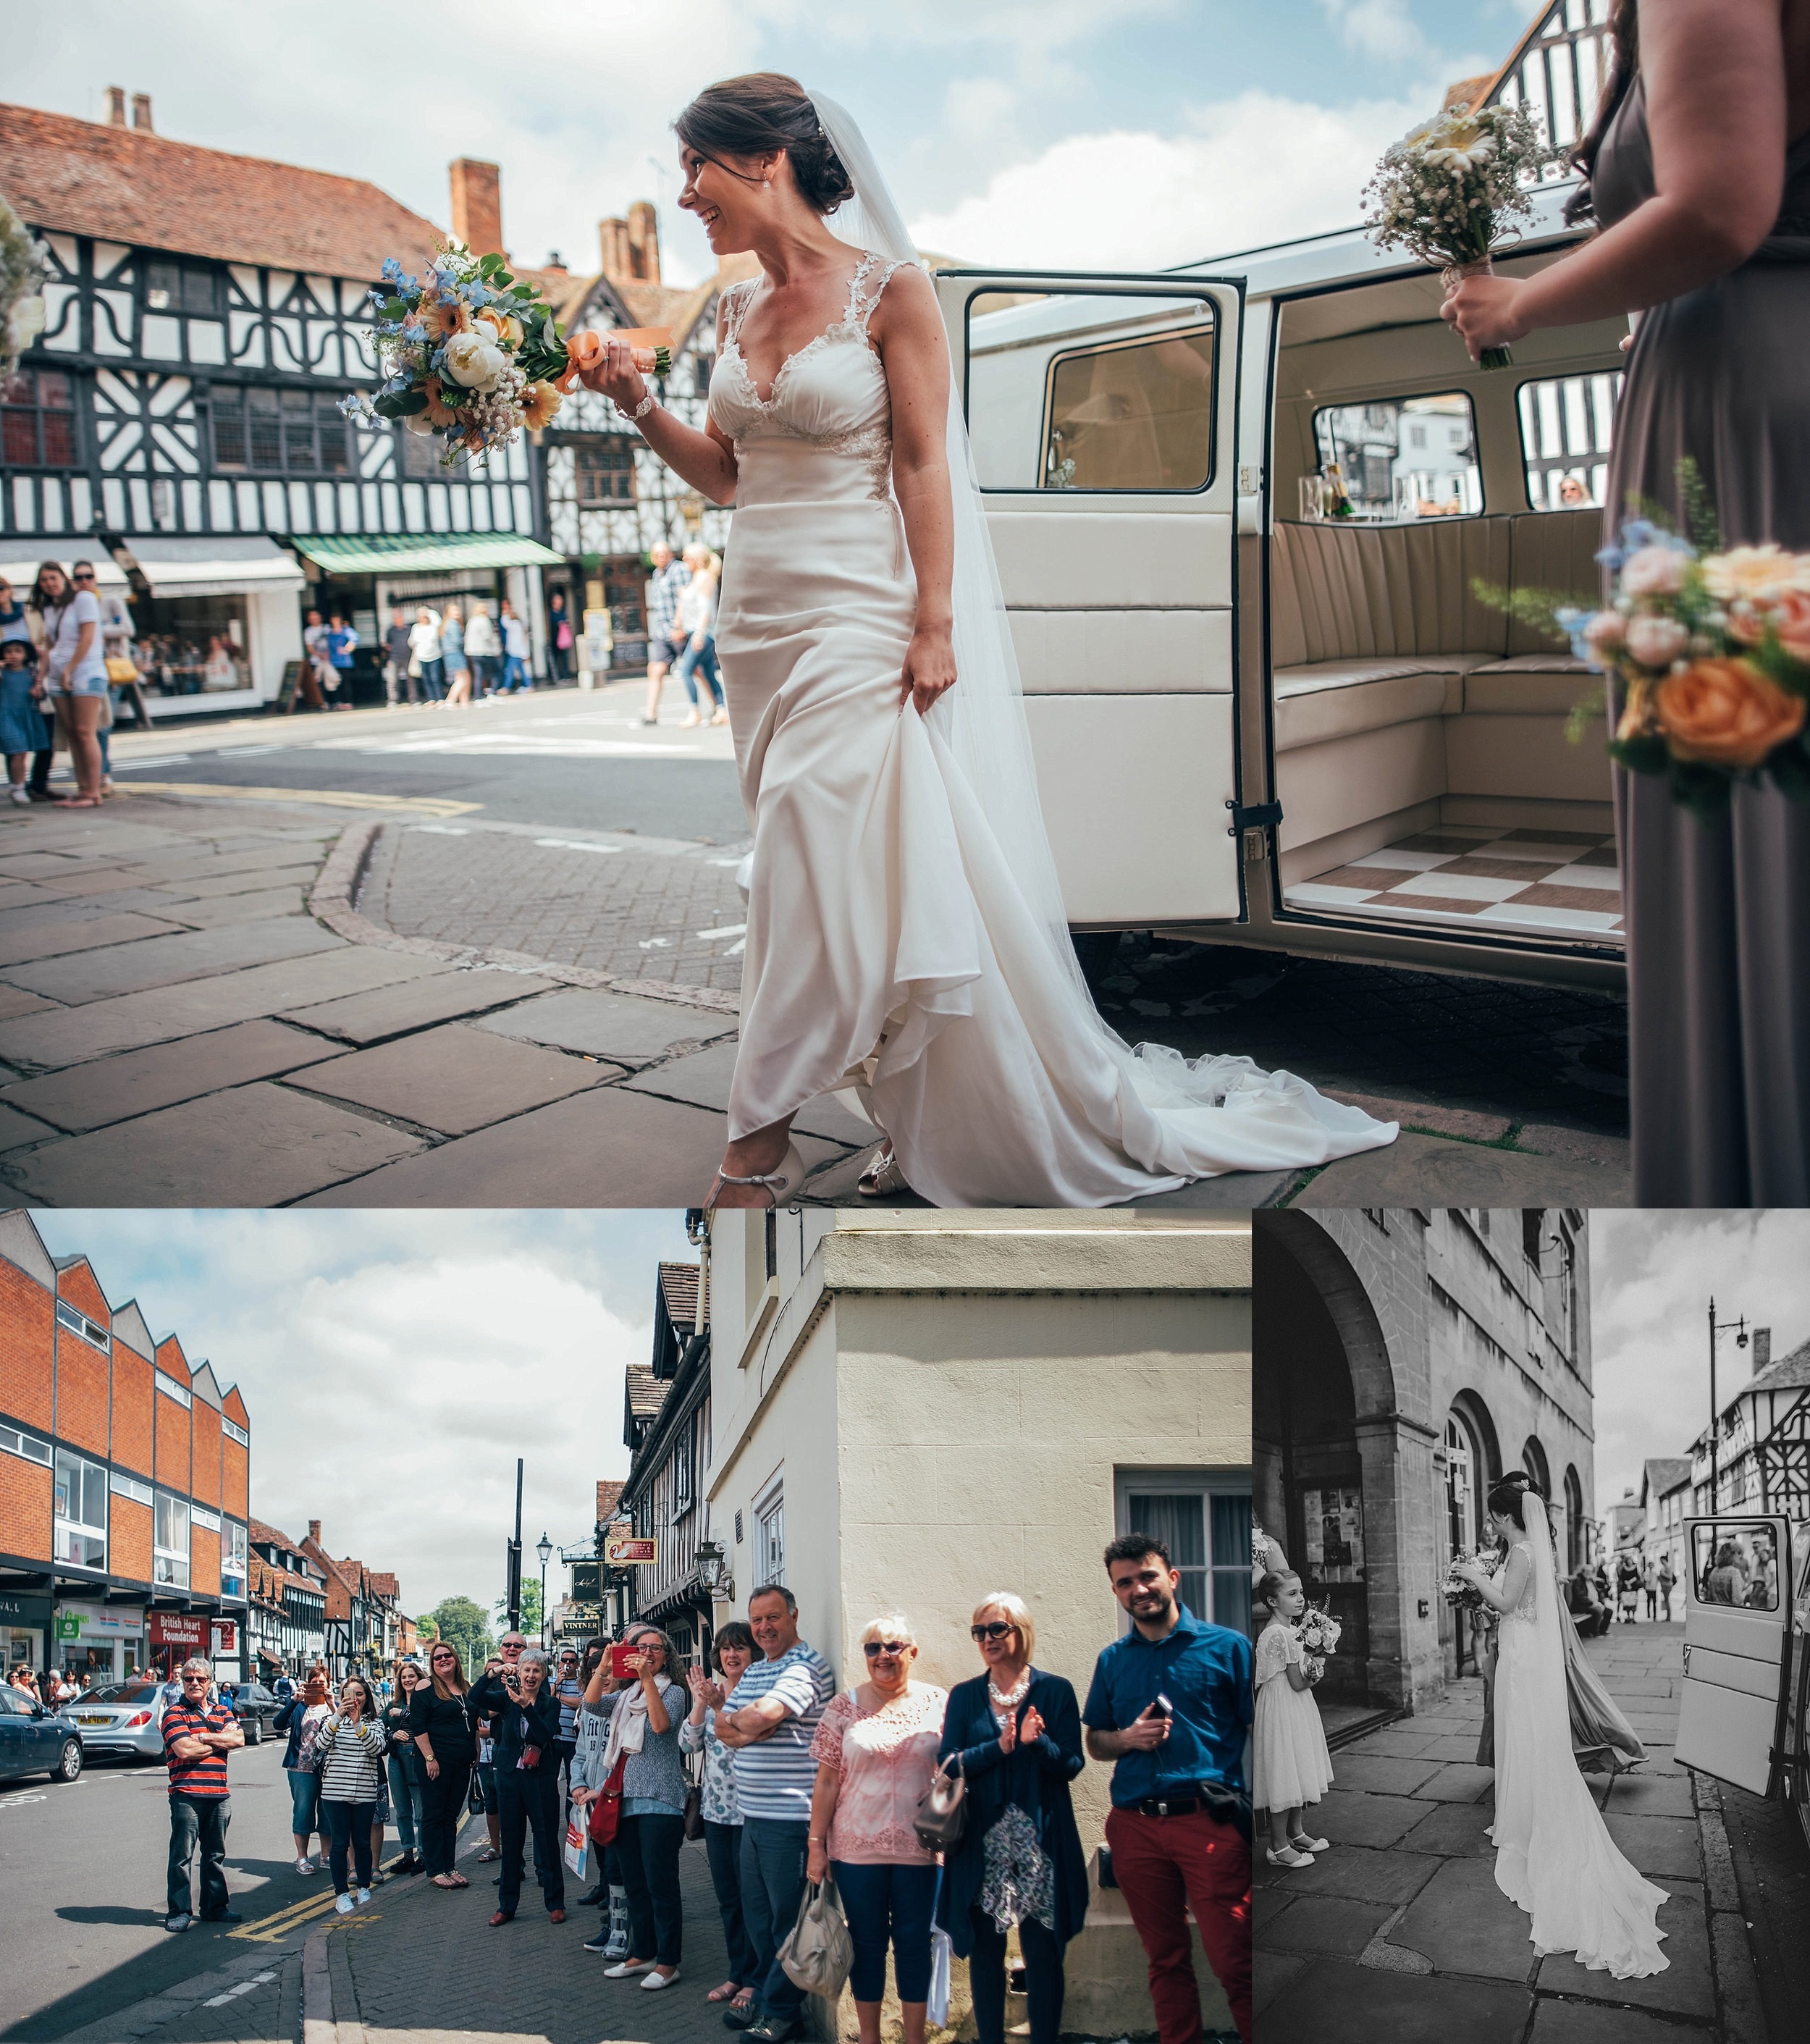 Stratford Upon Avon Town Hall Rustic Sherbourne Park Tipi Wedding Willowby Dress Essex UK Documentary Wedding Photographer